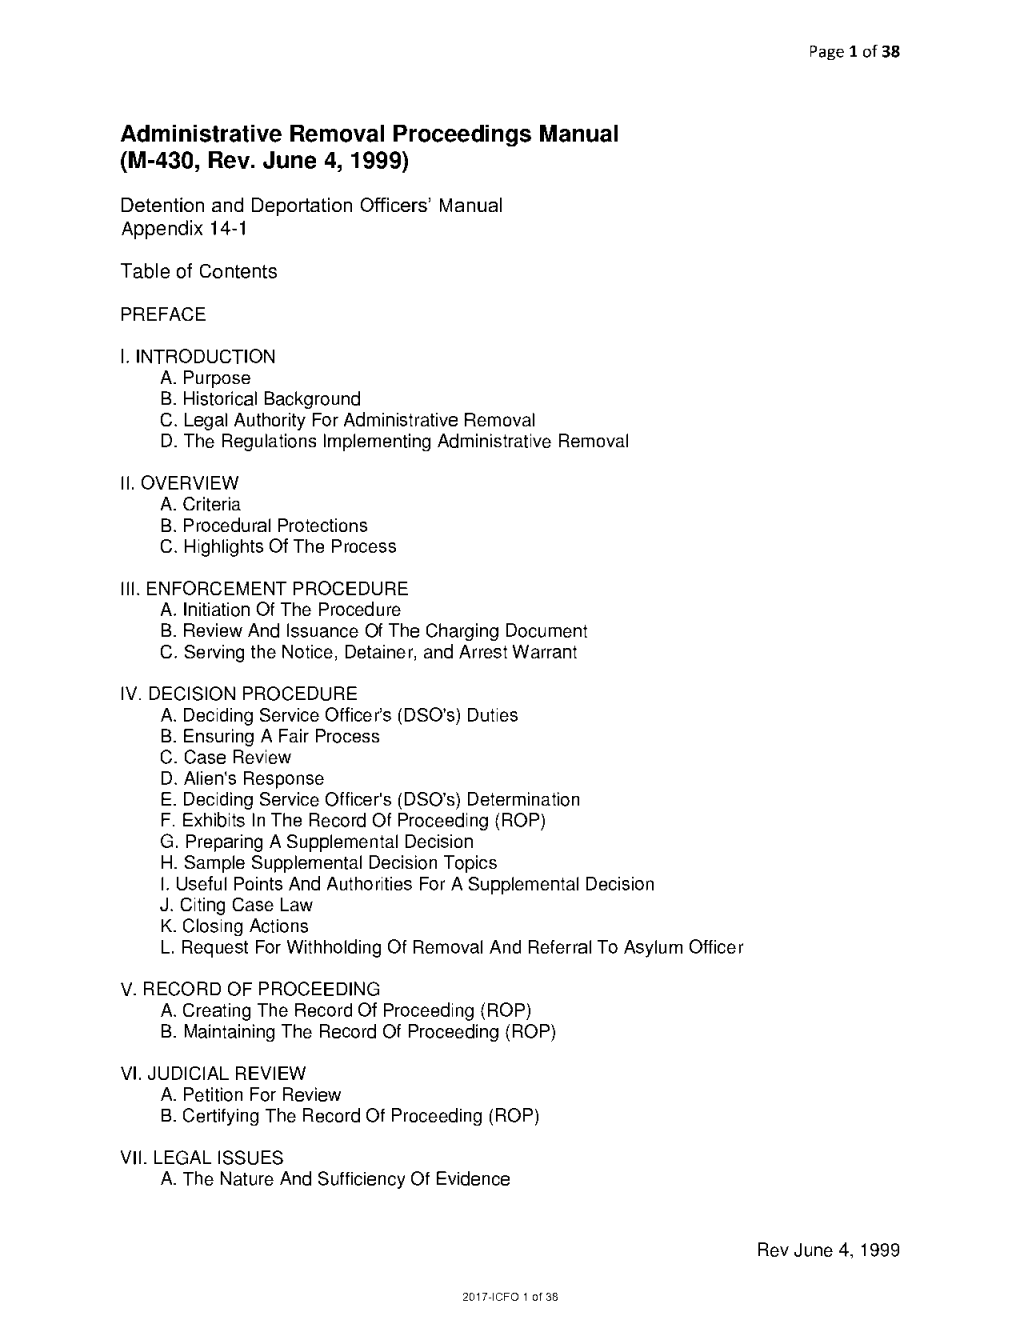 Administrative Removal Proceedings Manual (M-430, Rev. June 4, 1999)